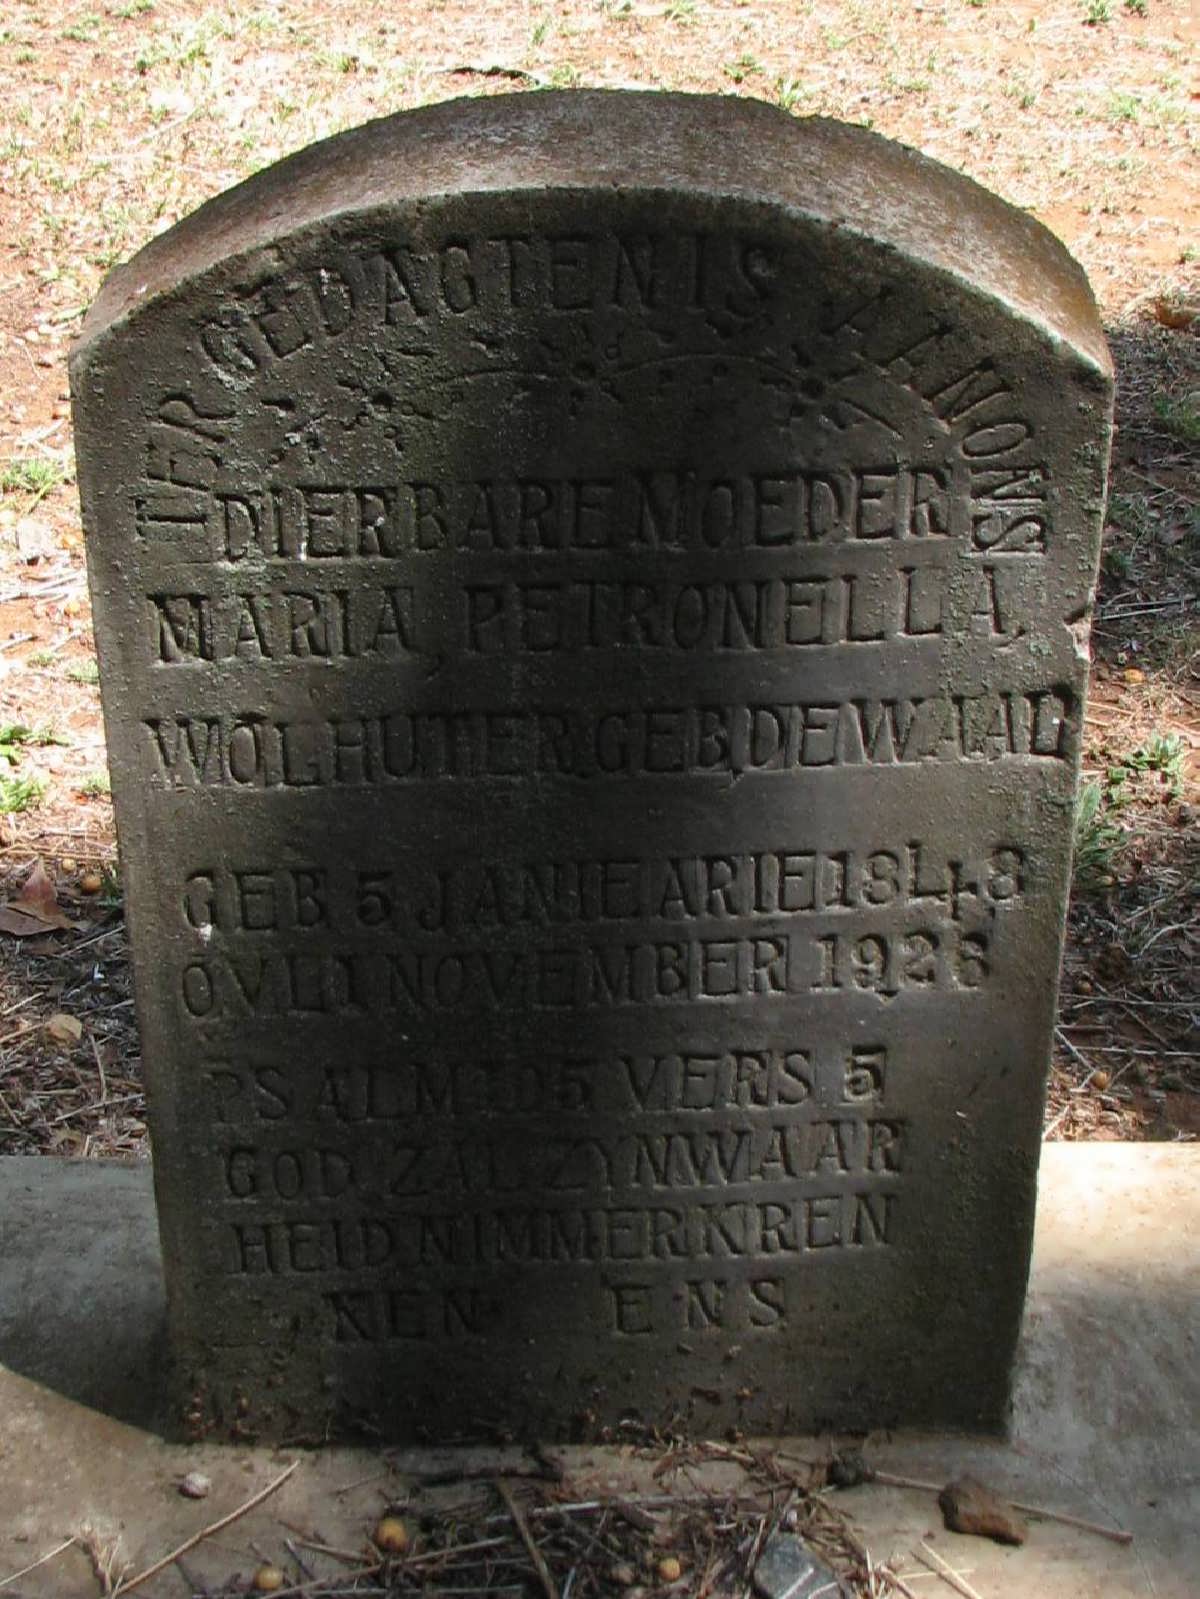 WOLHUTER Maria Petronella nee DE WAAL 1848-1926